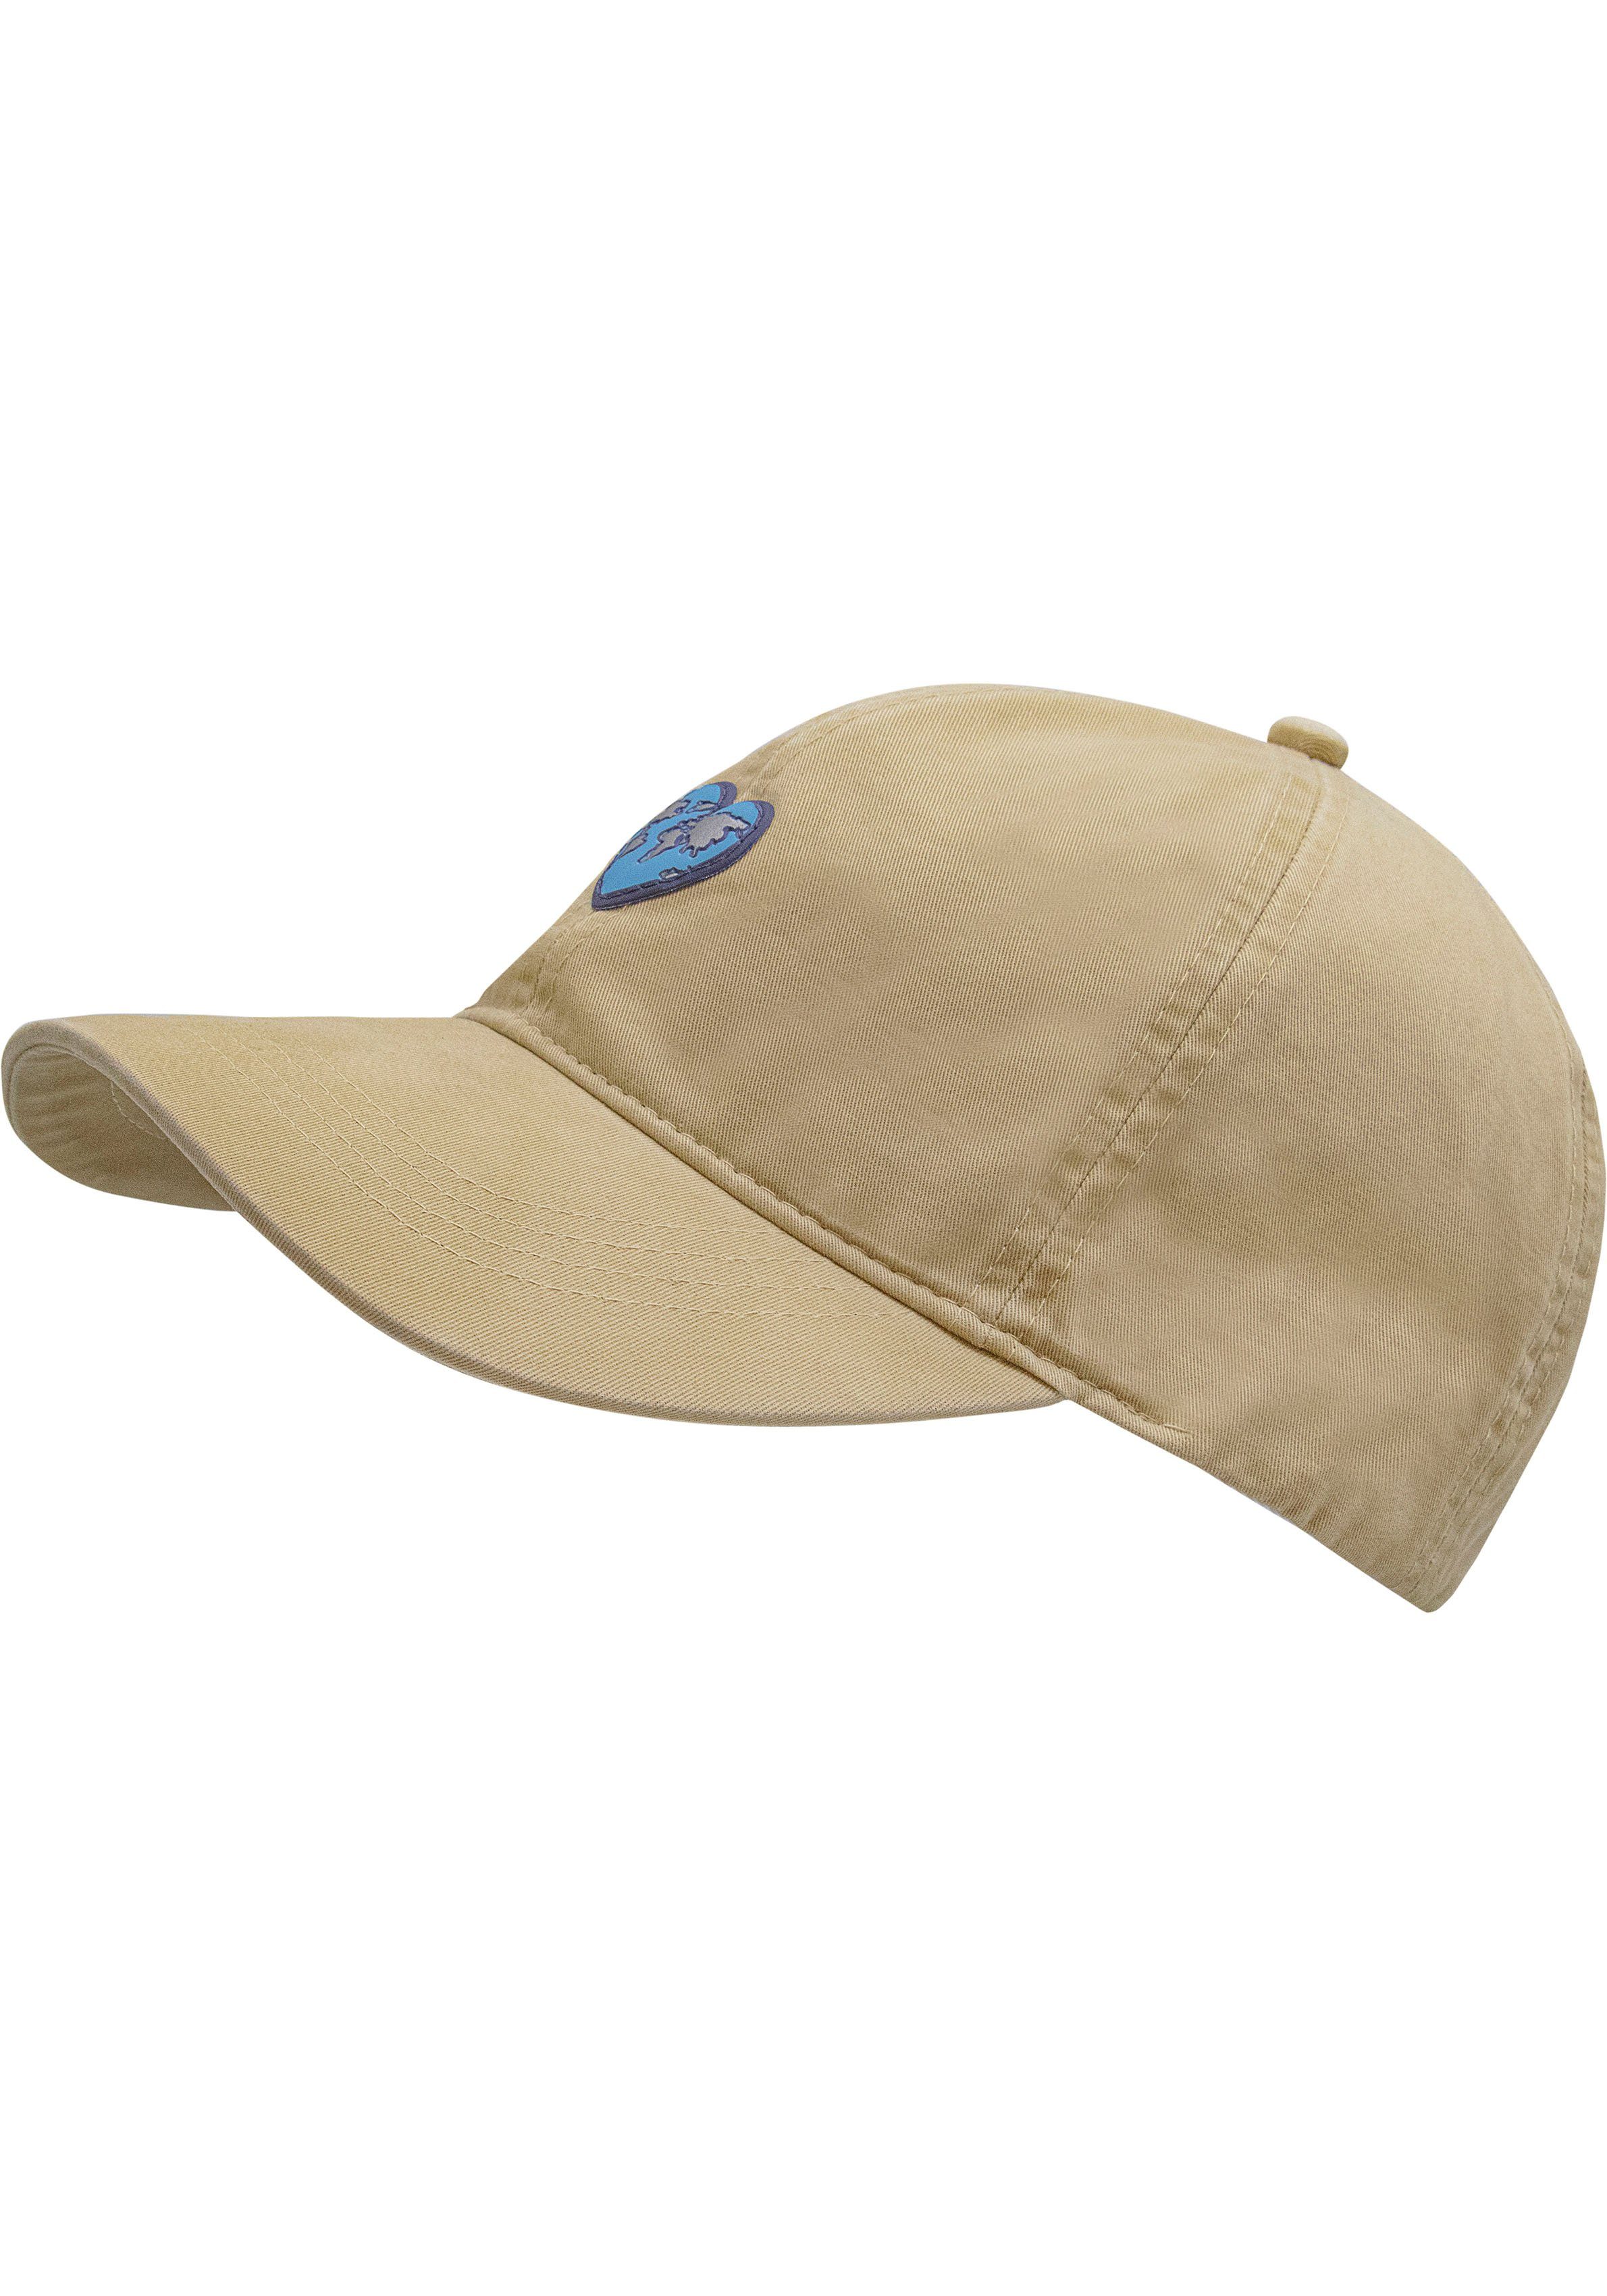 chillouts Baseball Cap Veracruz beige Hat